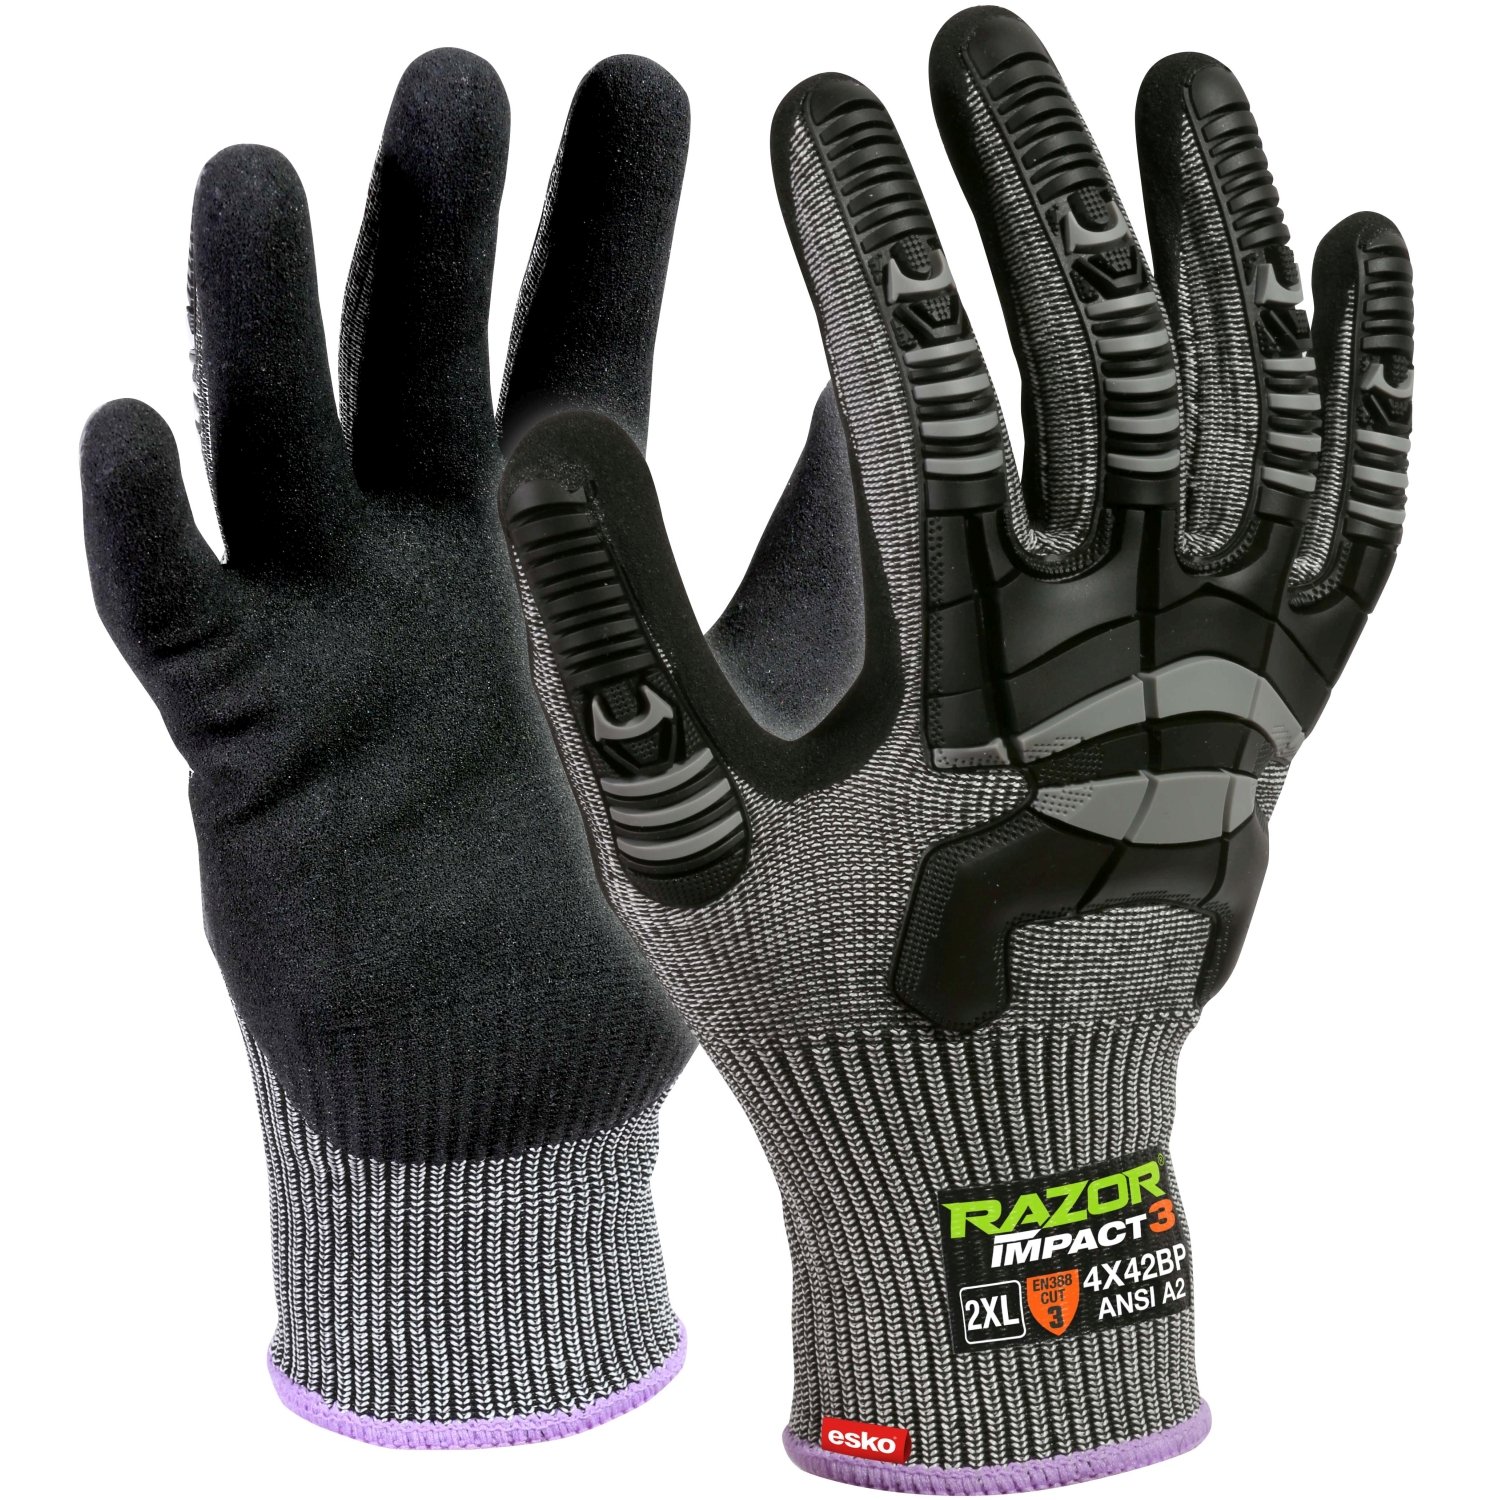 Razor Impact 3 Cut Resistant Level B Glove